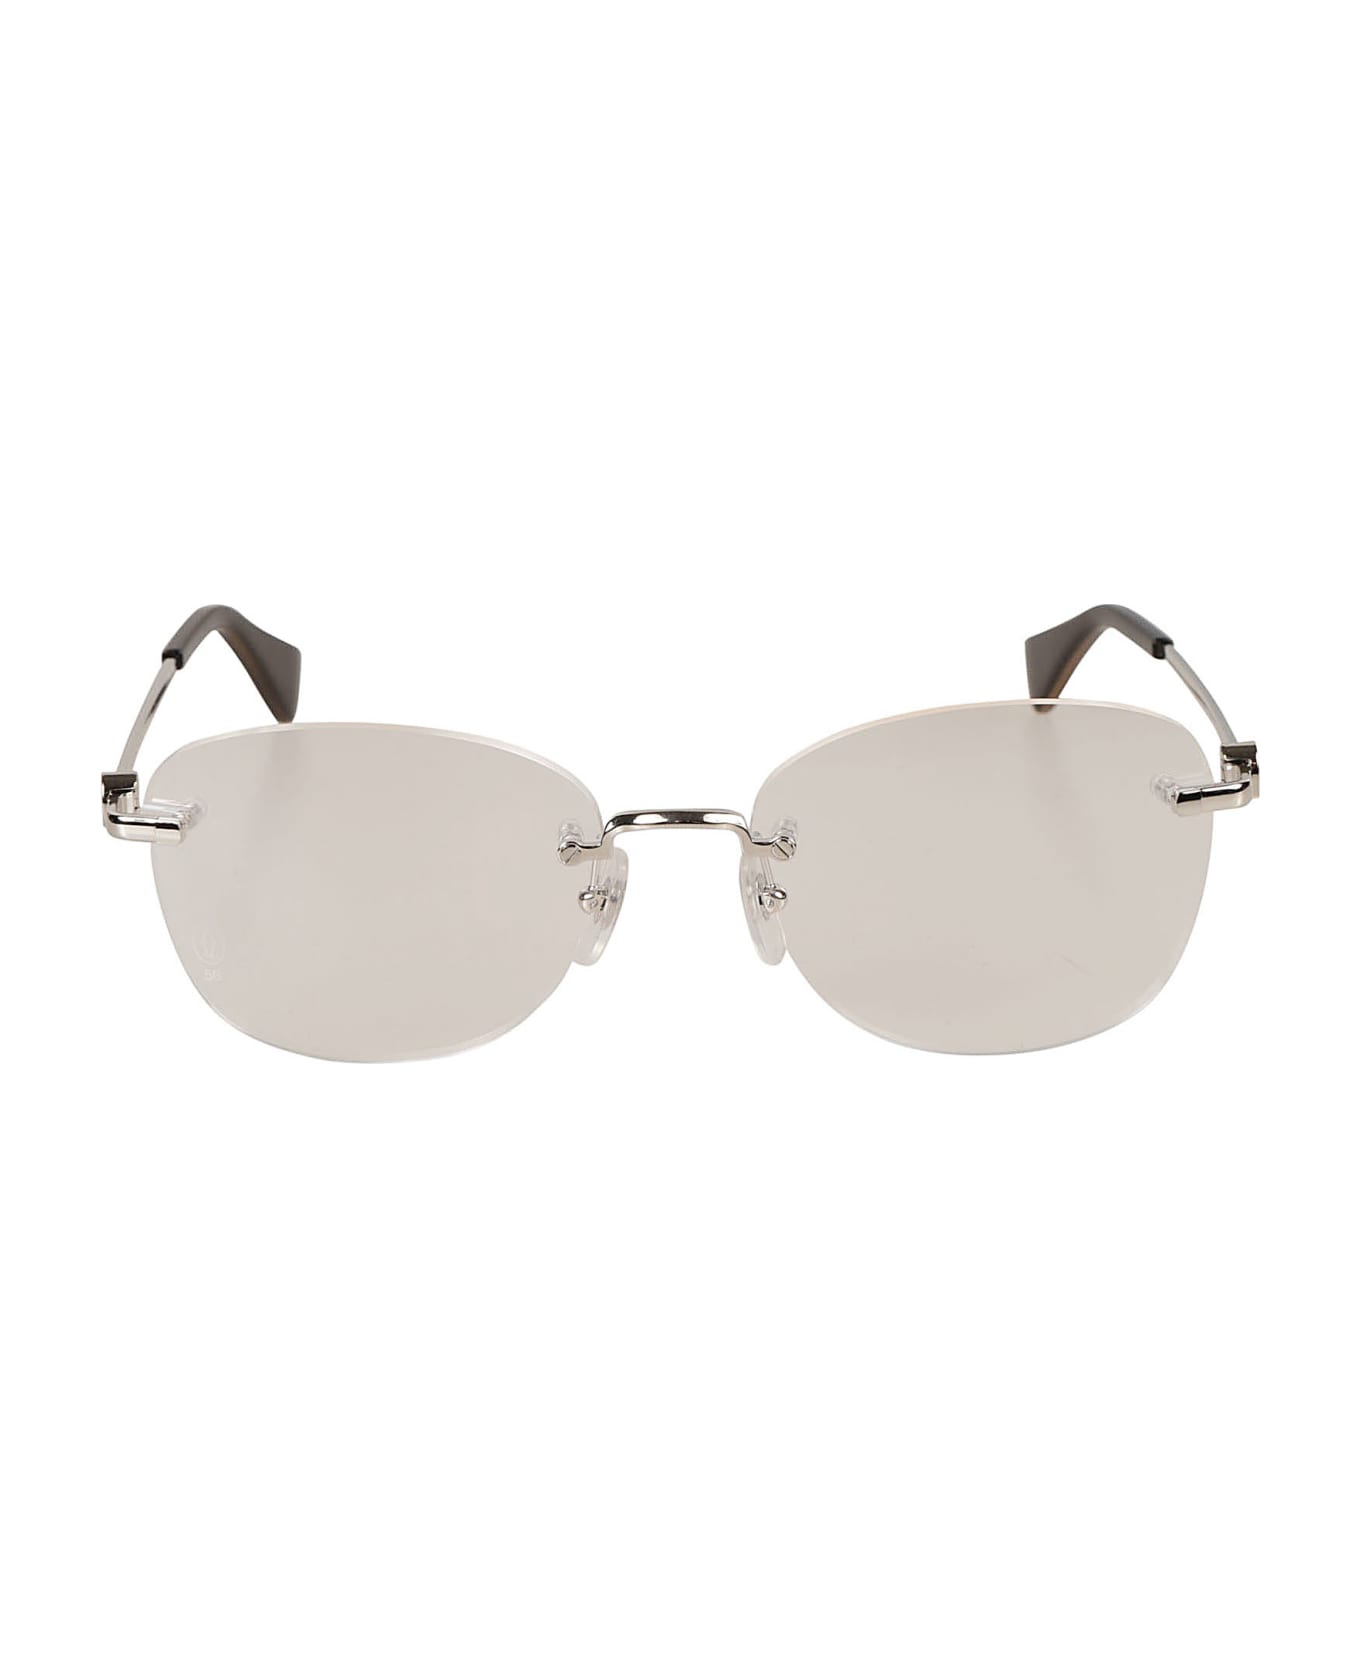 Cartier Eyewear Wayfarer Frame Glasses - Silver